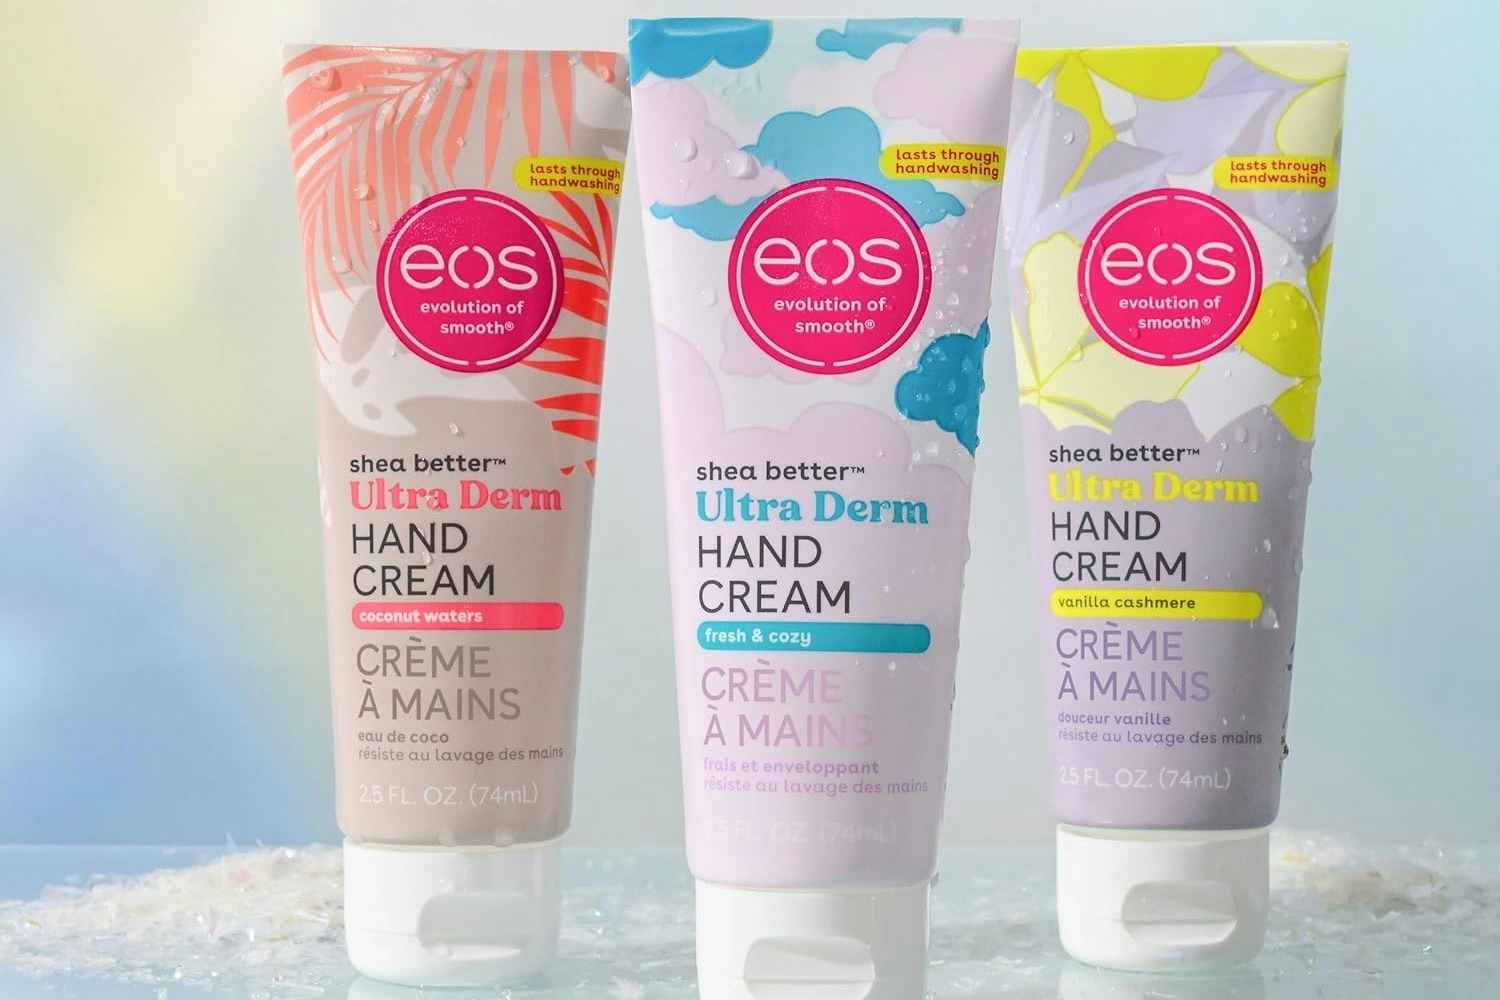  Eos Hand Creams, as Low as $2.39 on Amazon (Reg. $5)